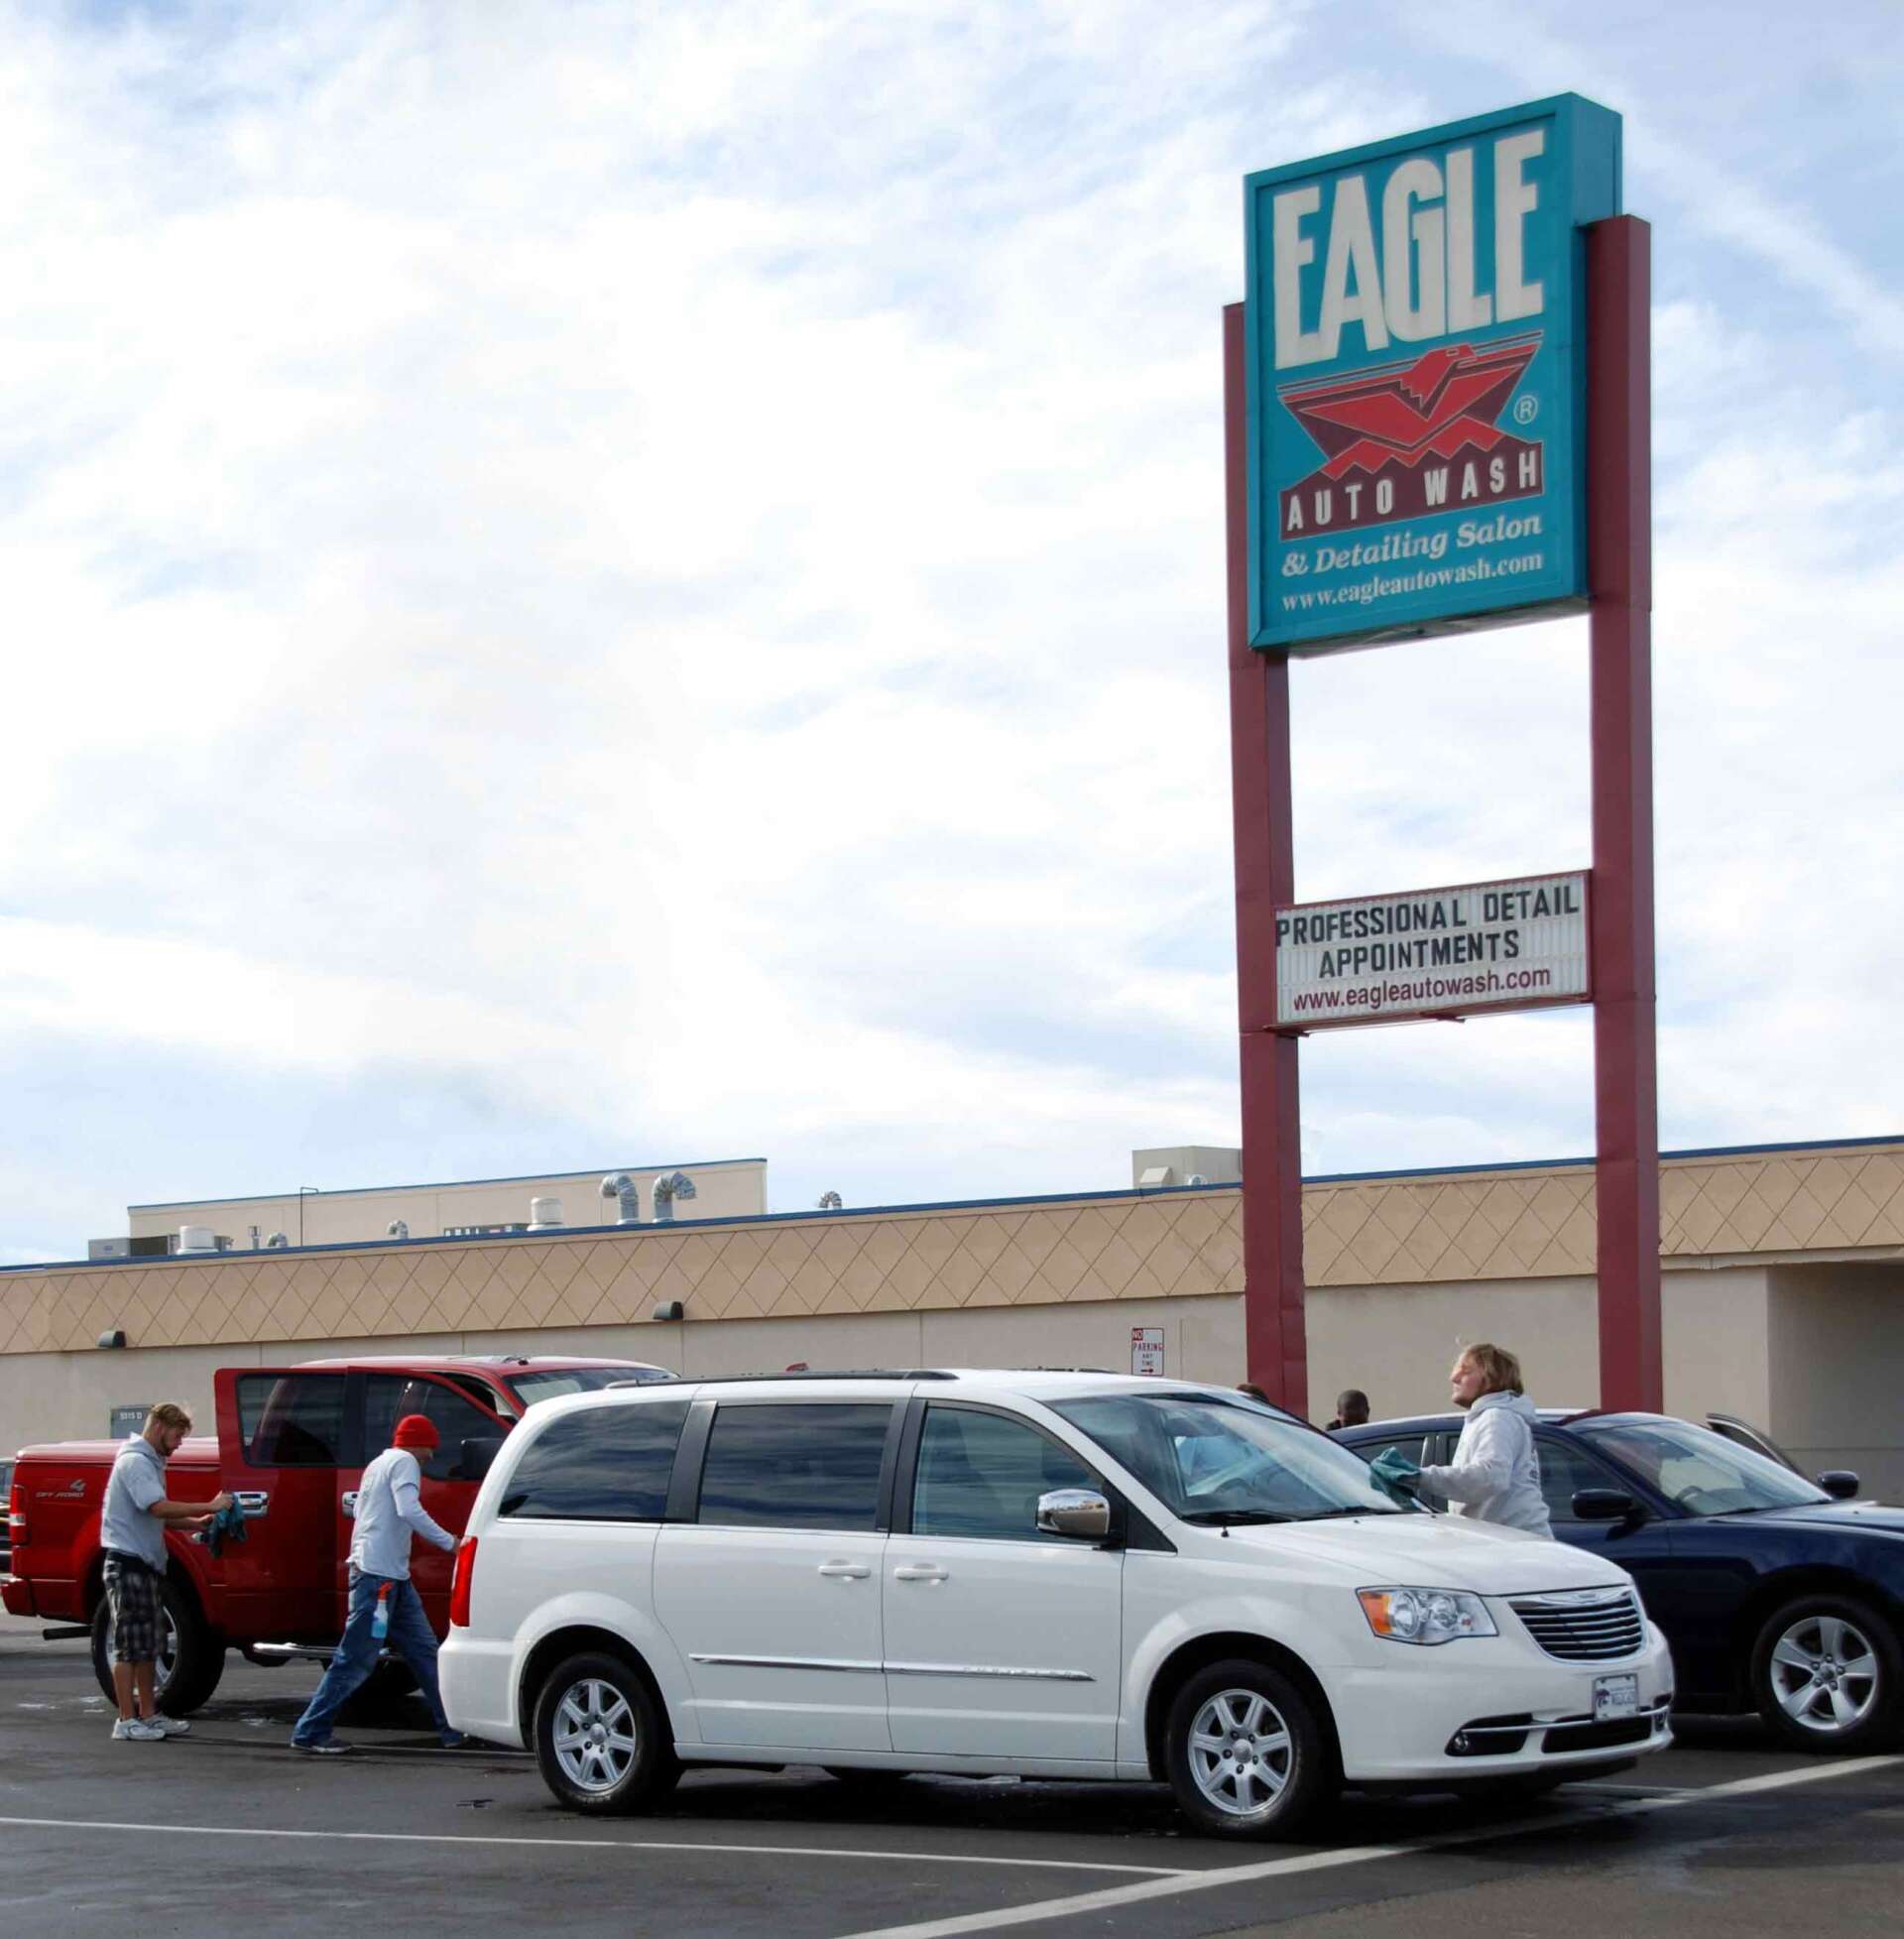 Auto Washing — Topeka, Kansas — Eagle Auto Wash & Detailing Salon